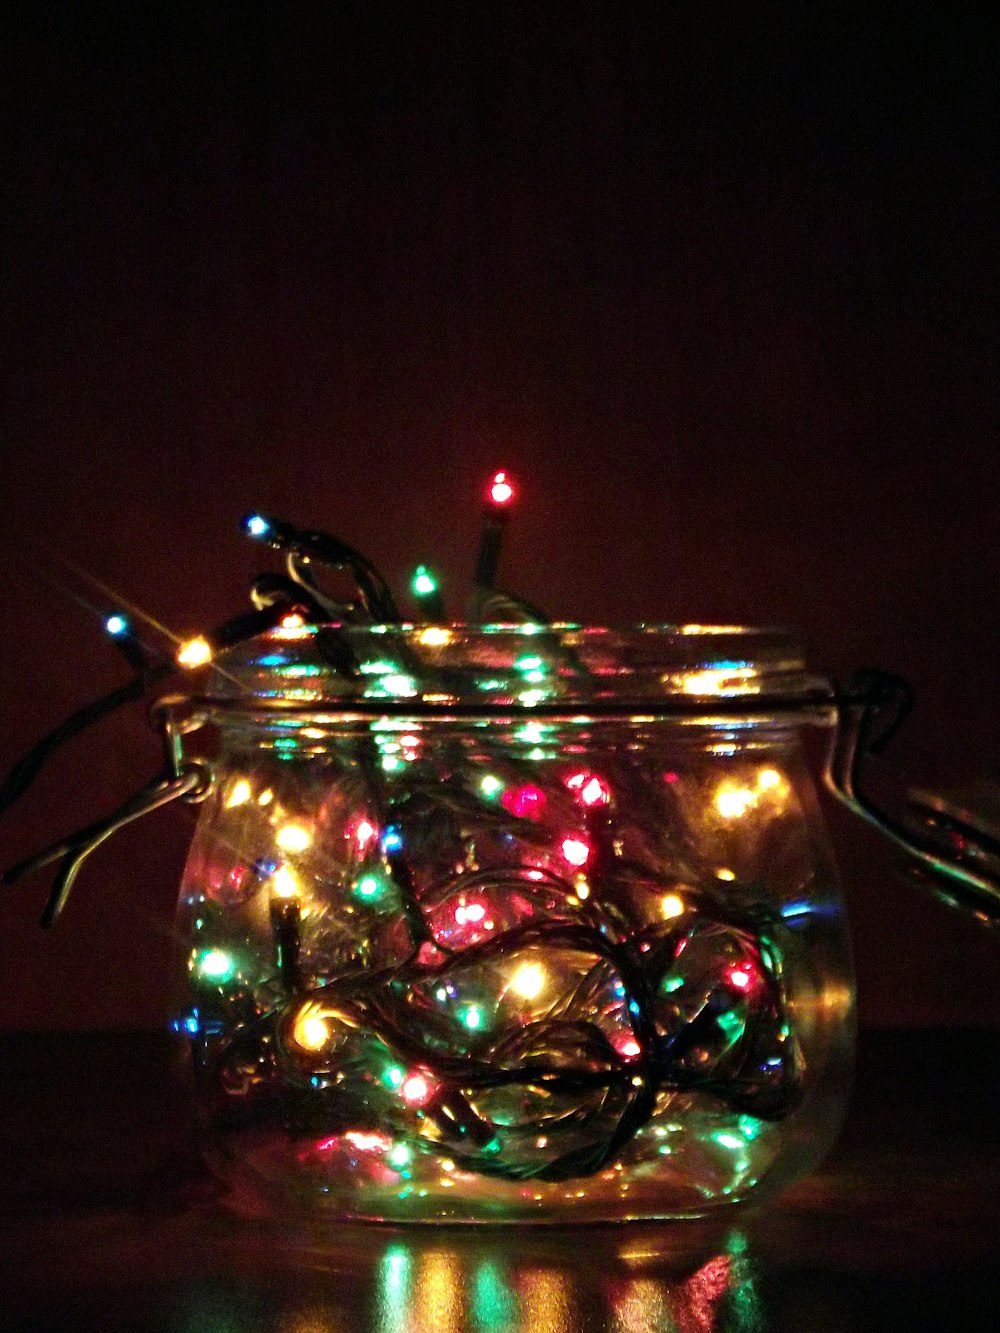 A glass jar containing Christmas tree lights.